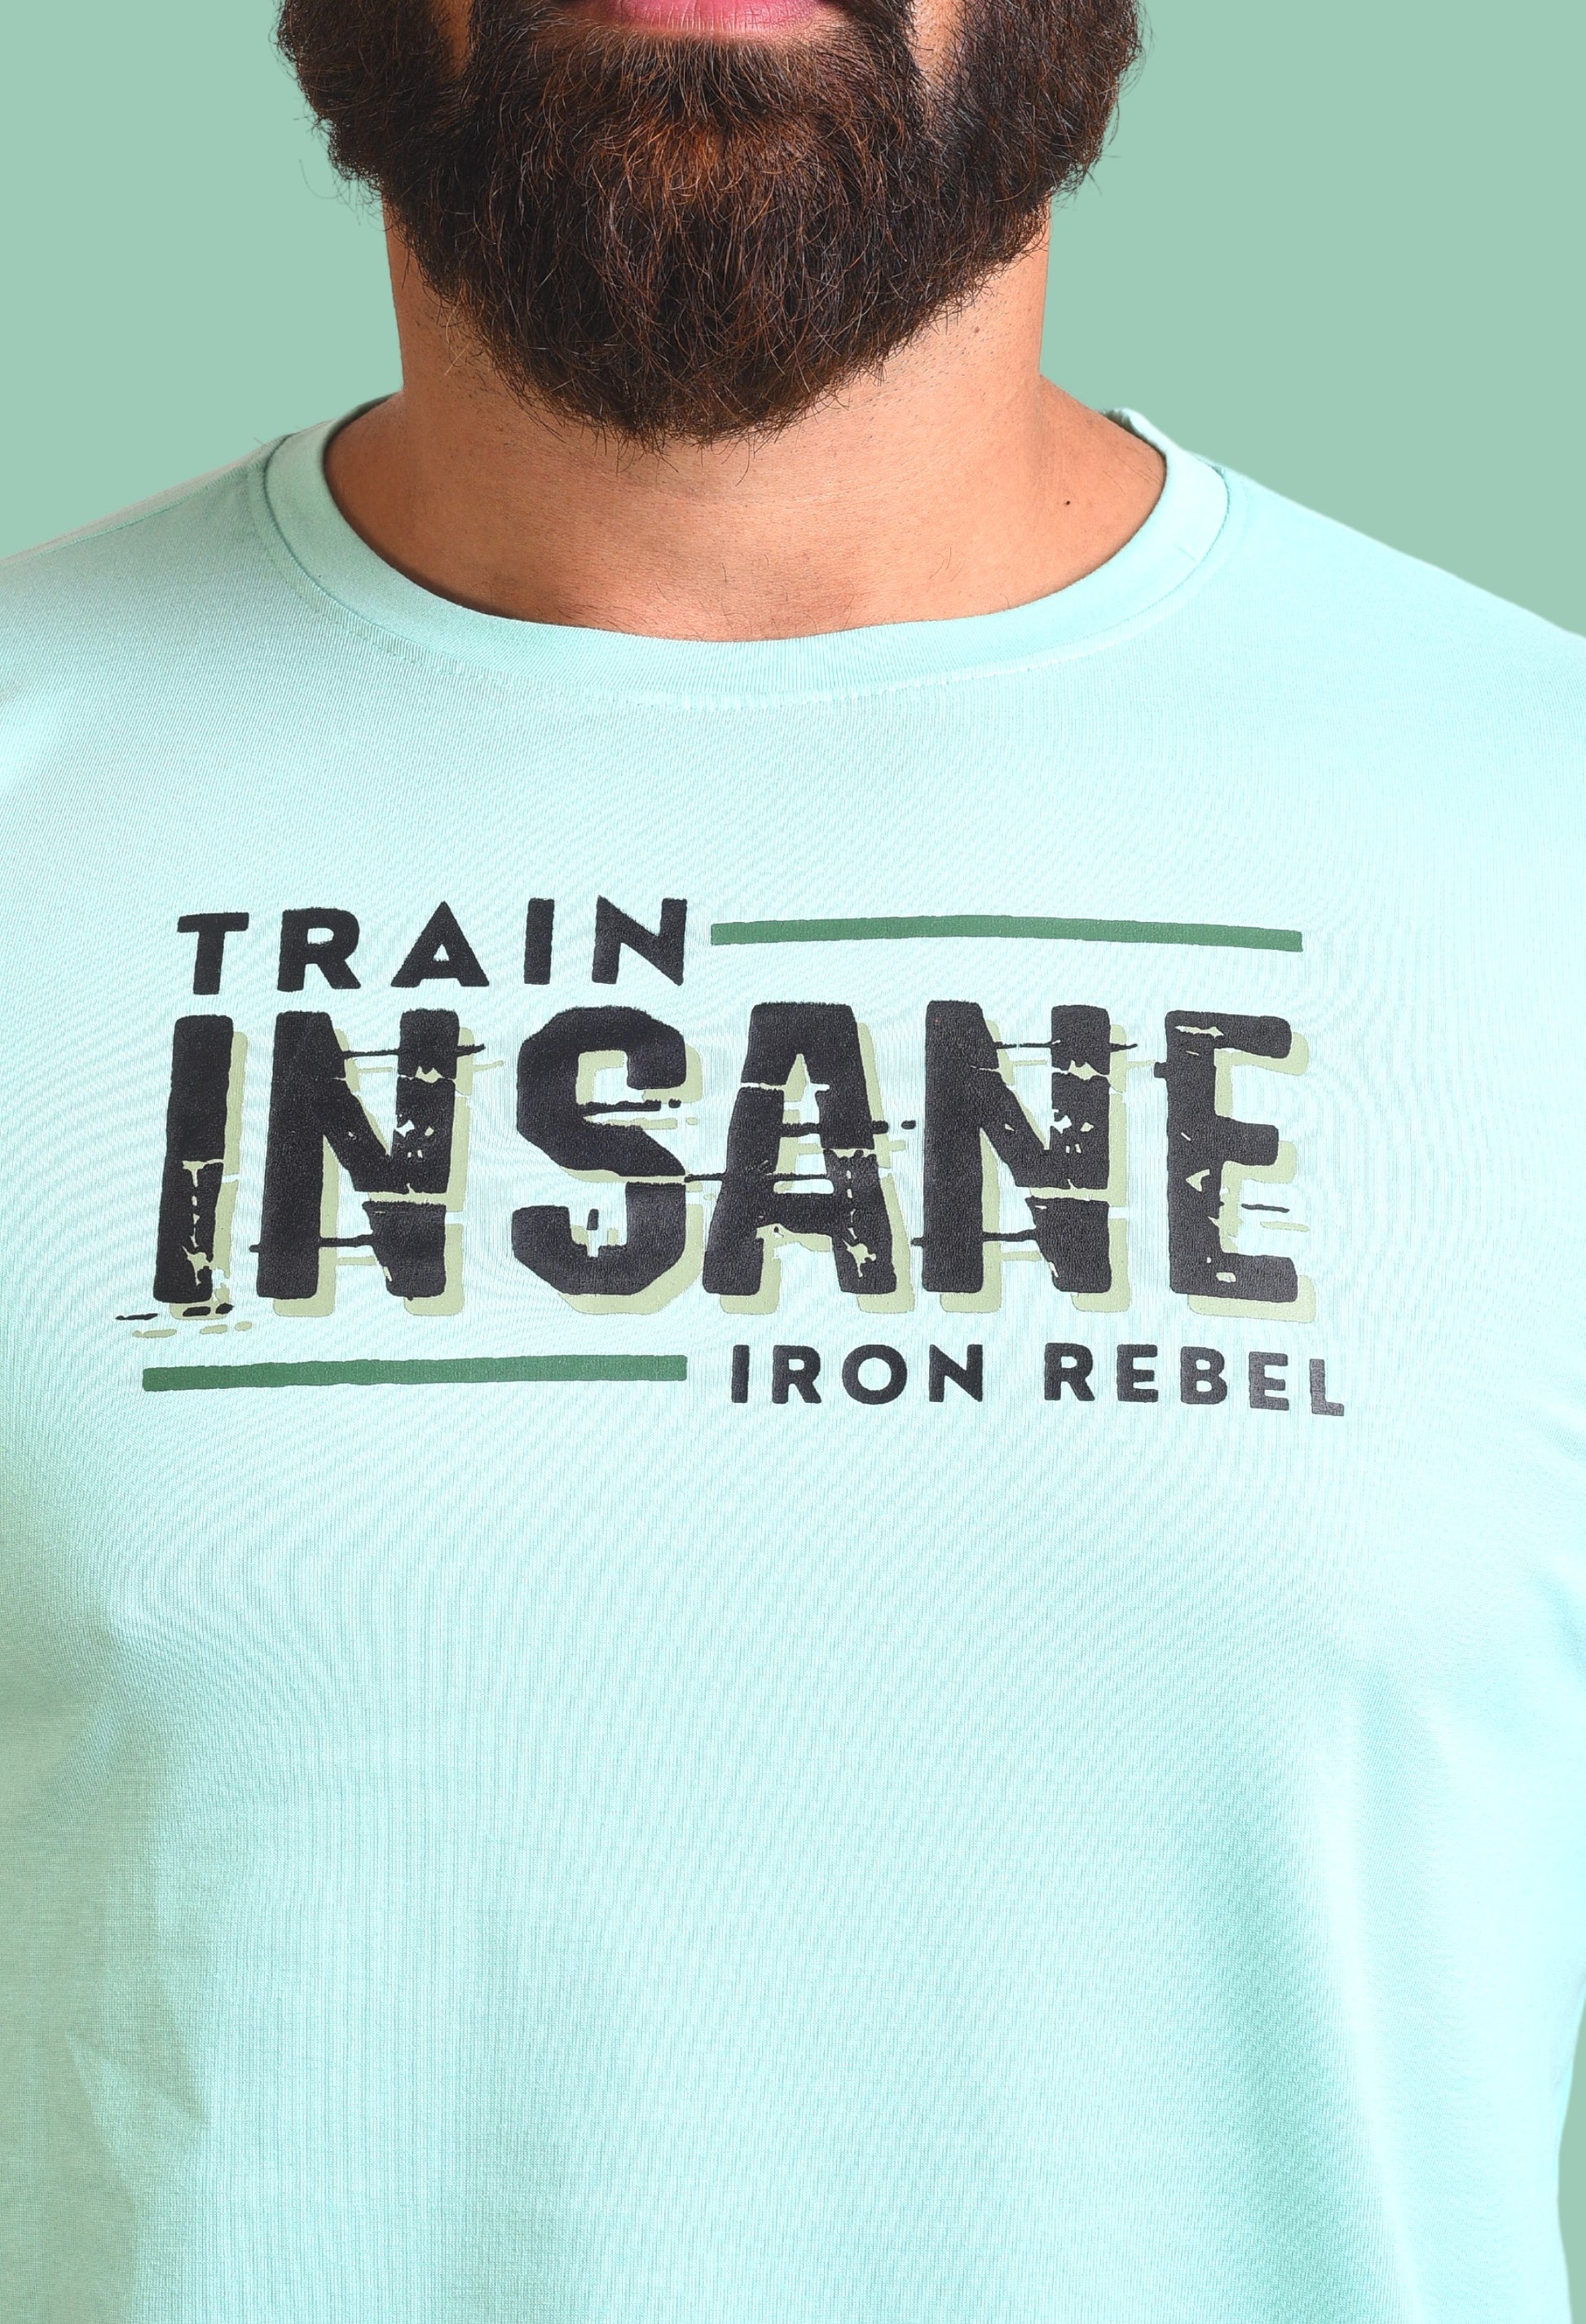 Gym T Shirt - Train Insane Iron Rebel - Men T-Shirt with premium cotton Lycra. The Sports T Shirt by Strong Soul